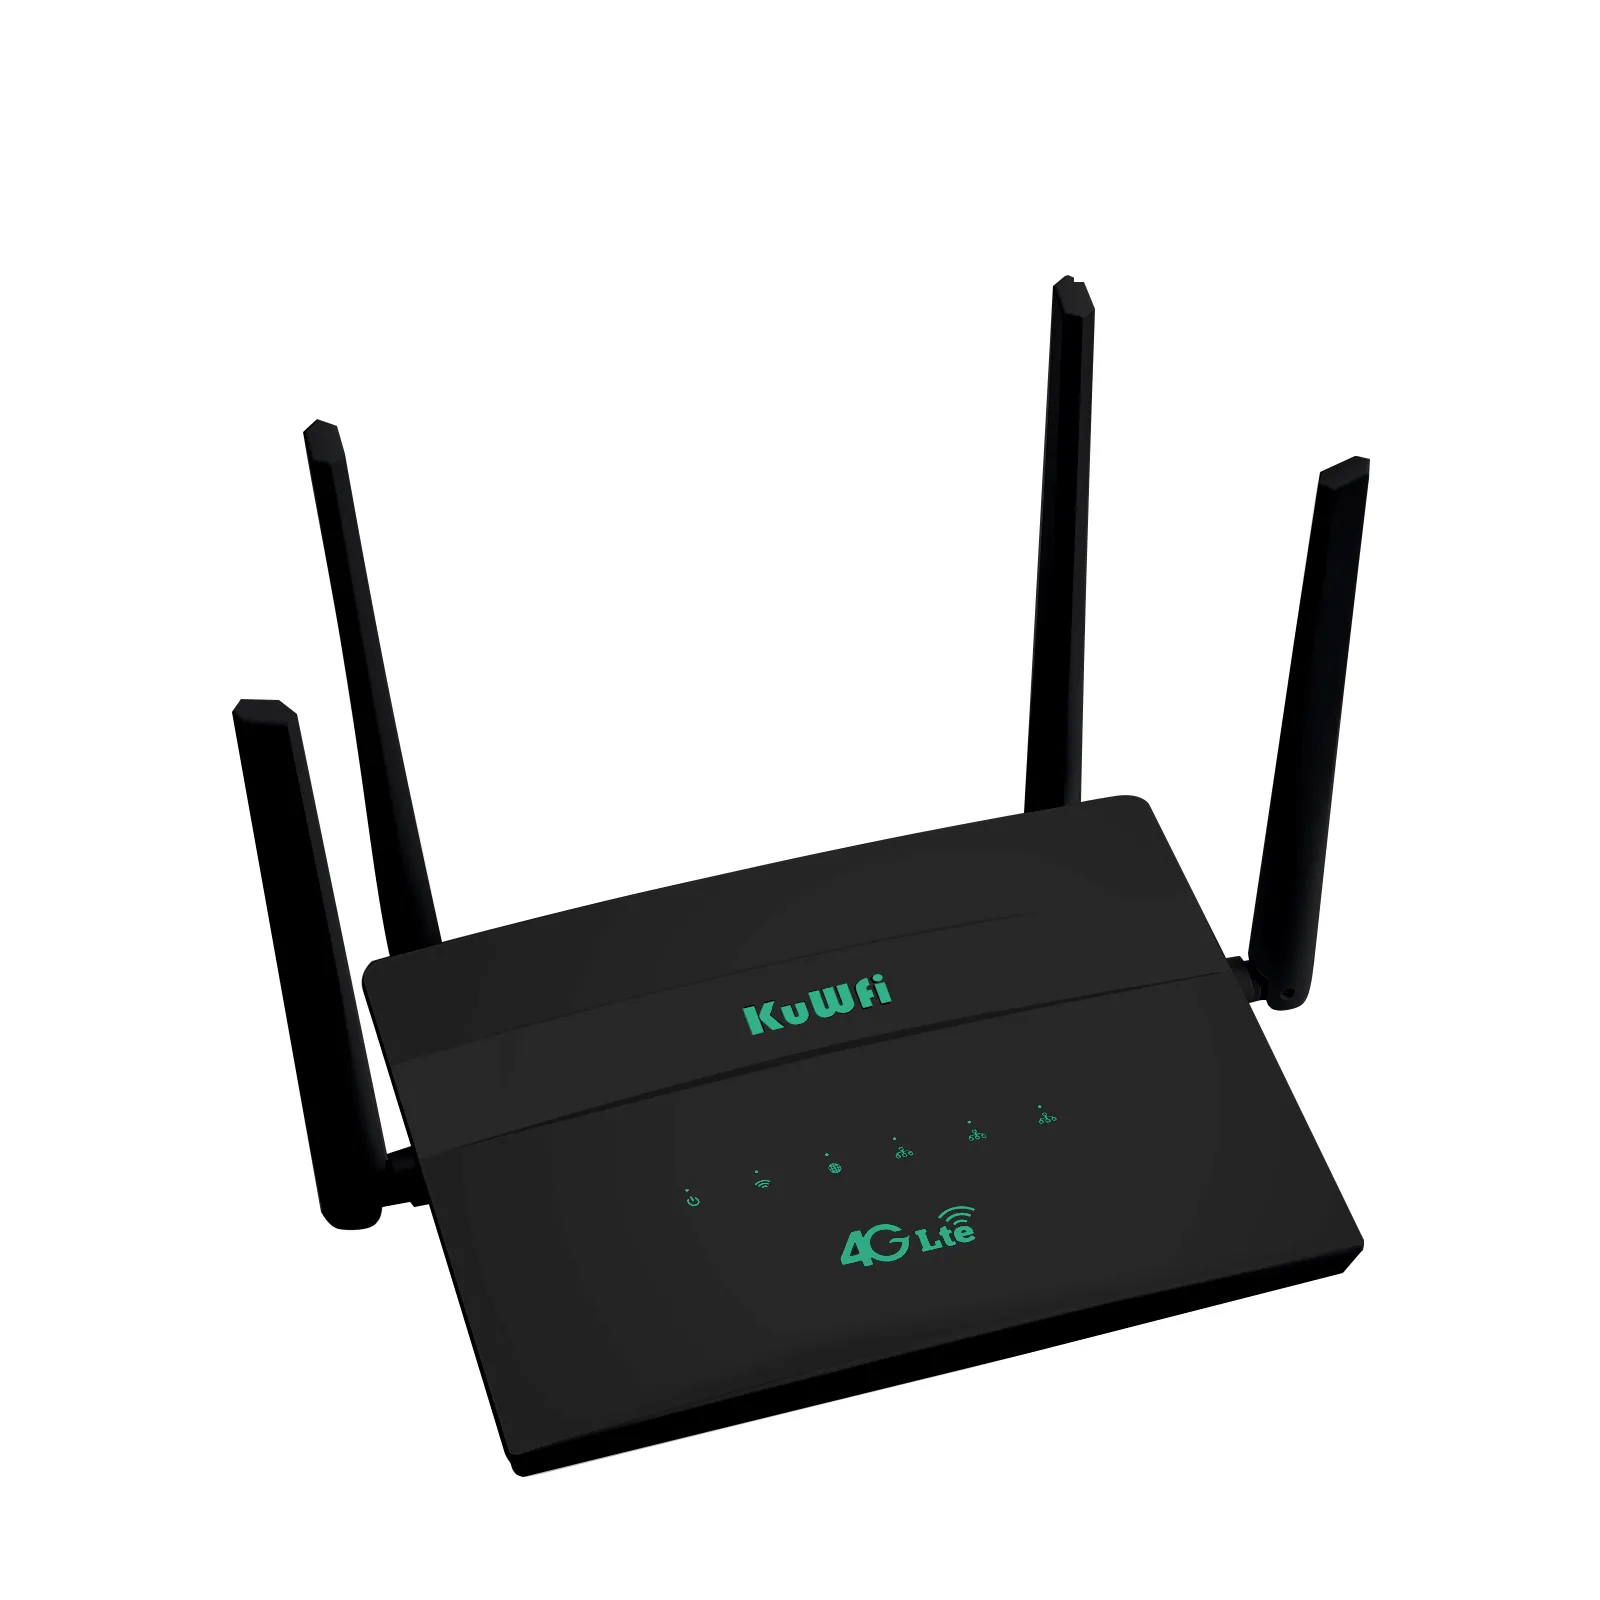 Двухдиапазонный маршрутизатор KuWFi 4g 750 Мбит/с 4g lte беспроводной маршрутизатор 32 пользователей разблокированный модем маршрутизатор Wi-Fi 4g с сим-картой